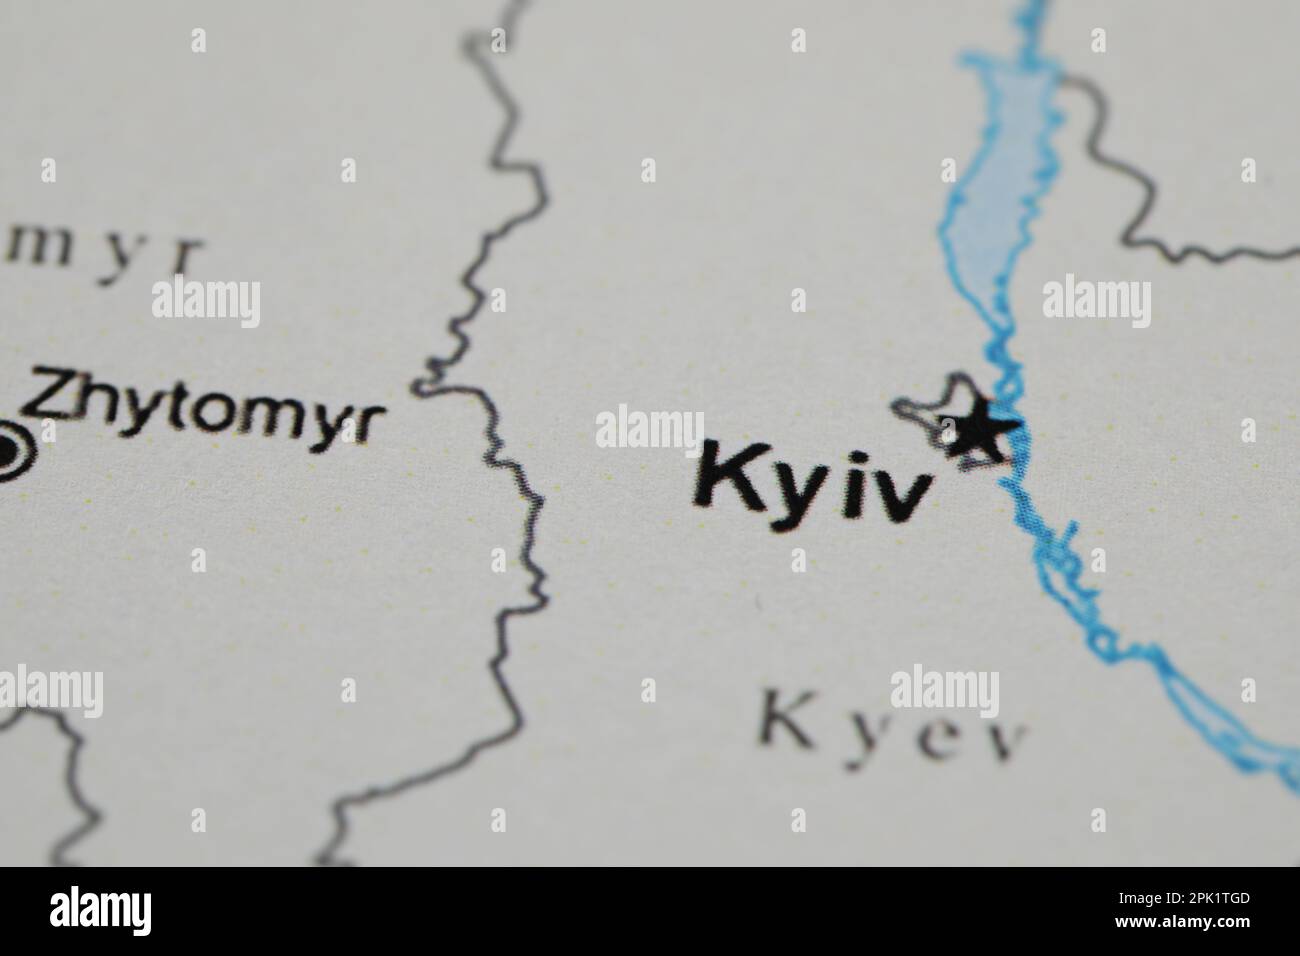 MYKOLAIV, UKRAINE - NOVEMBER 09, 2020: Kyiv city marked on map of Ukraine, closeup Stock Photo